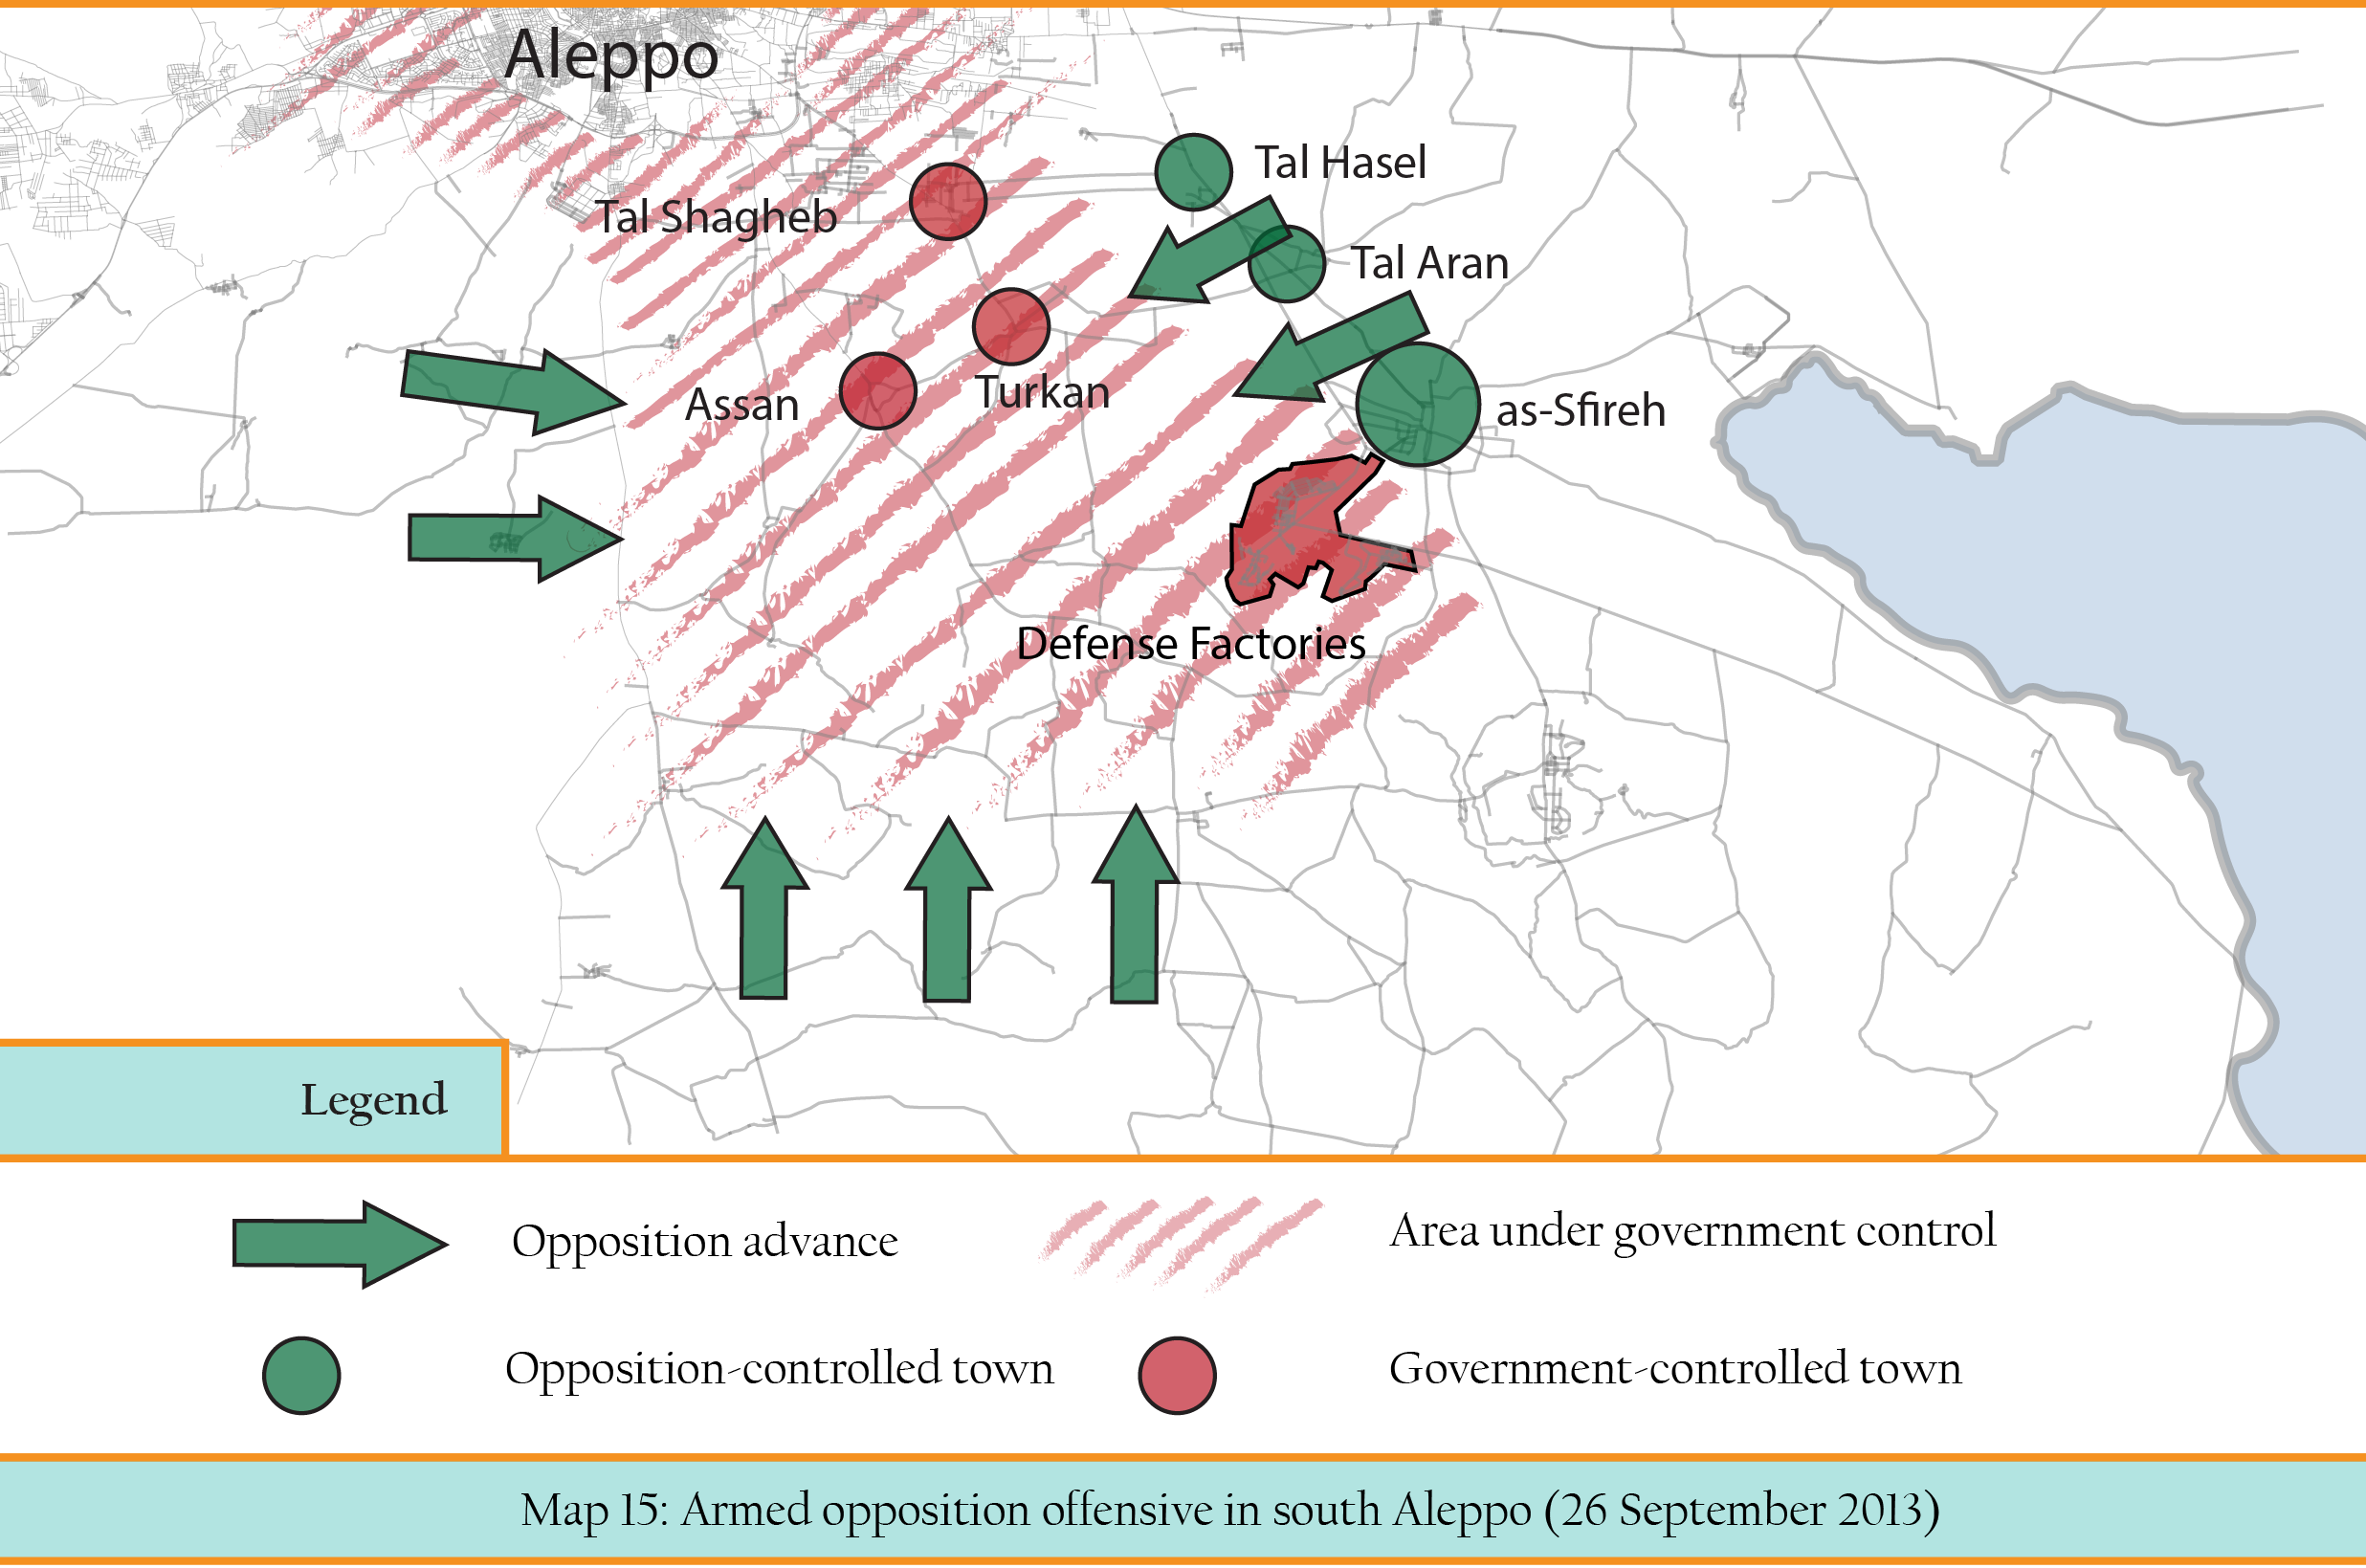 Ahrar al-Sham's map